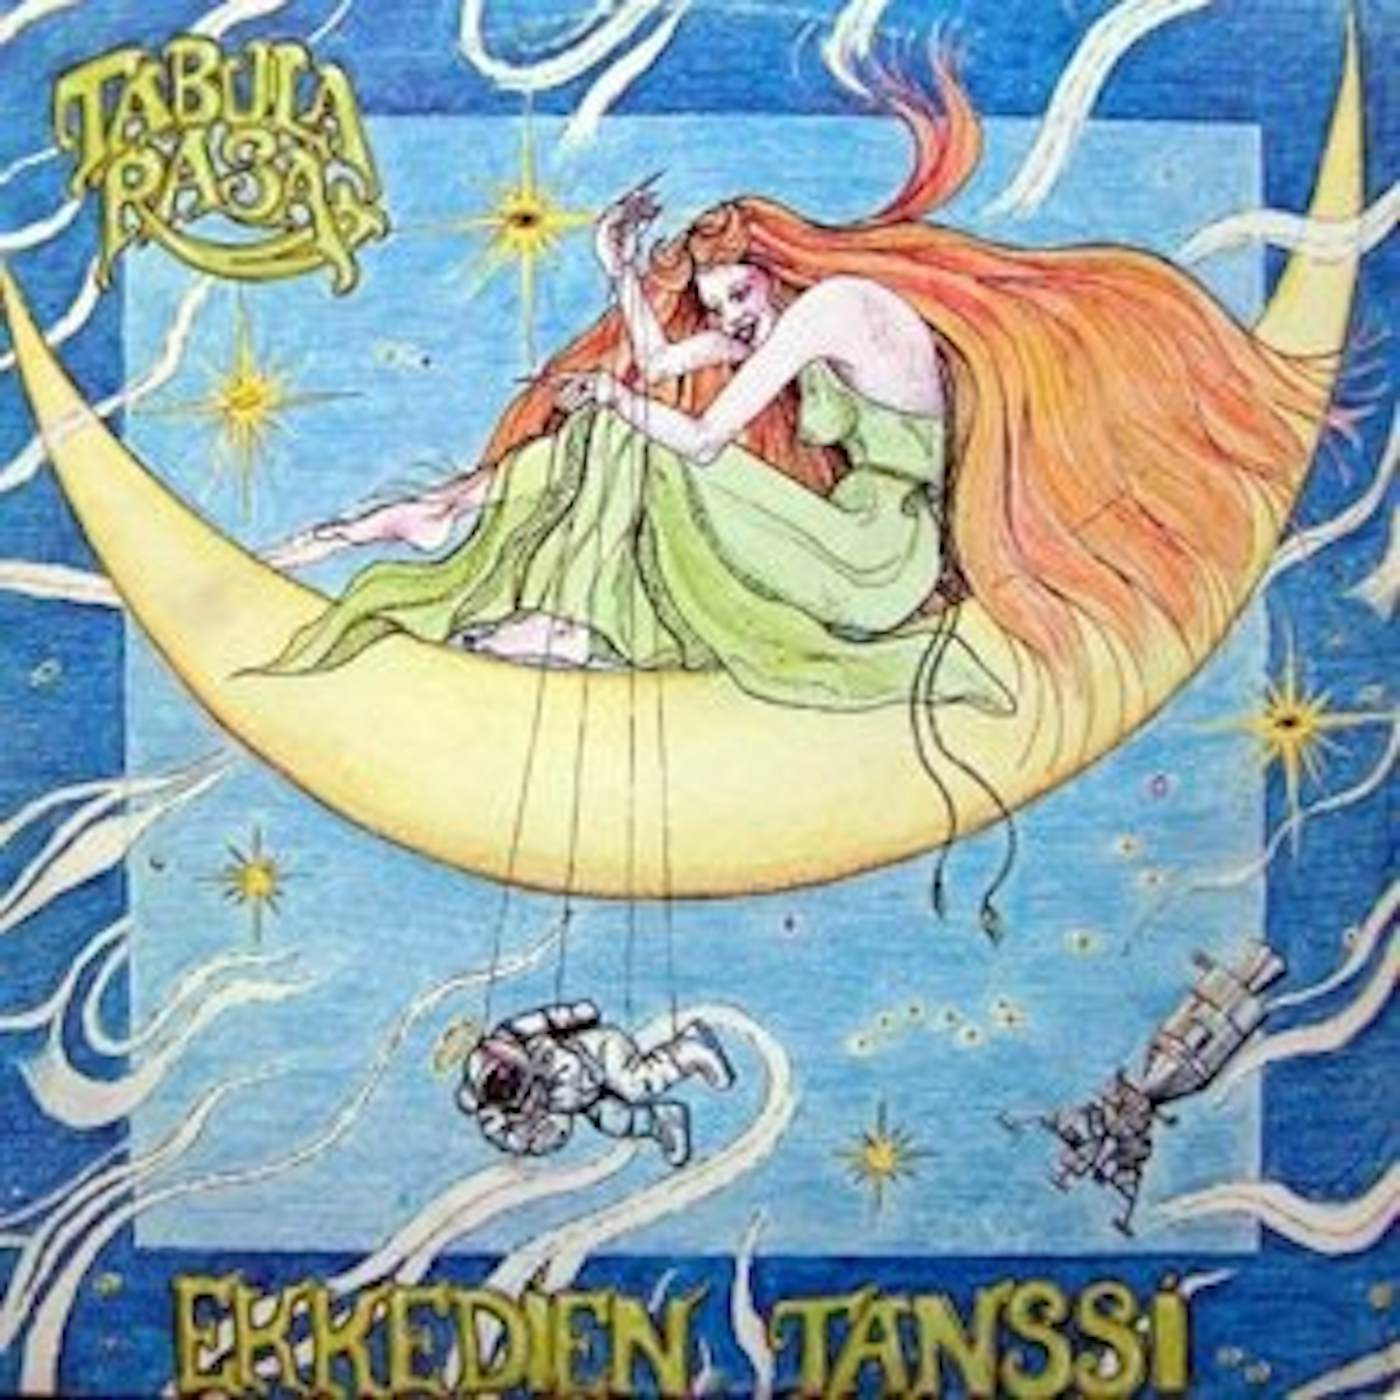 Tabula Rasa Ekkedien Tanssi Vinyl Record